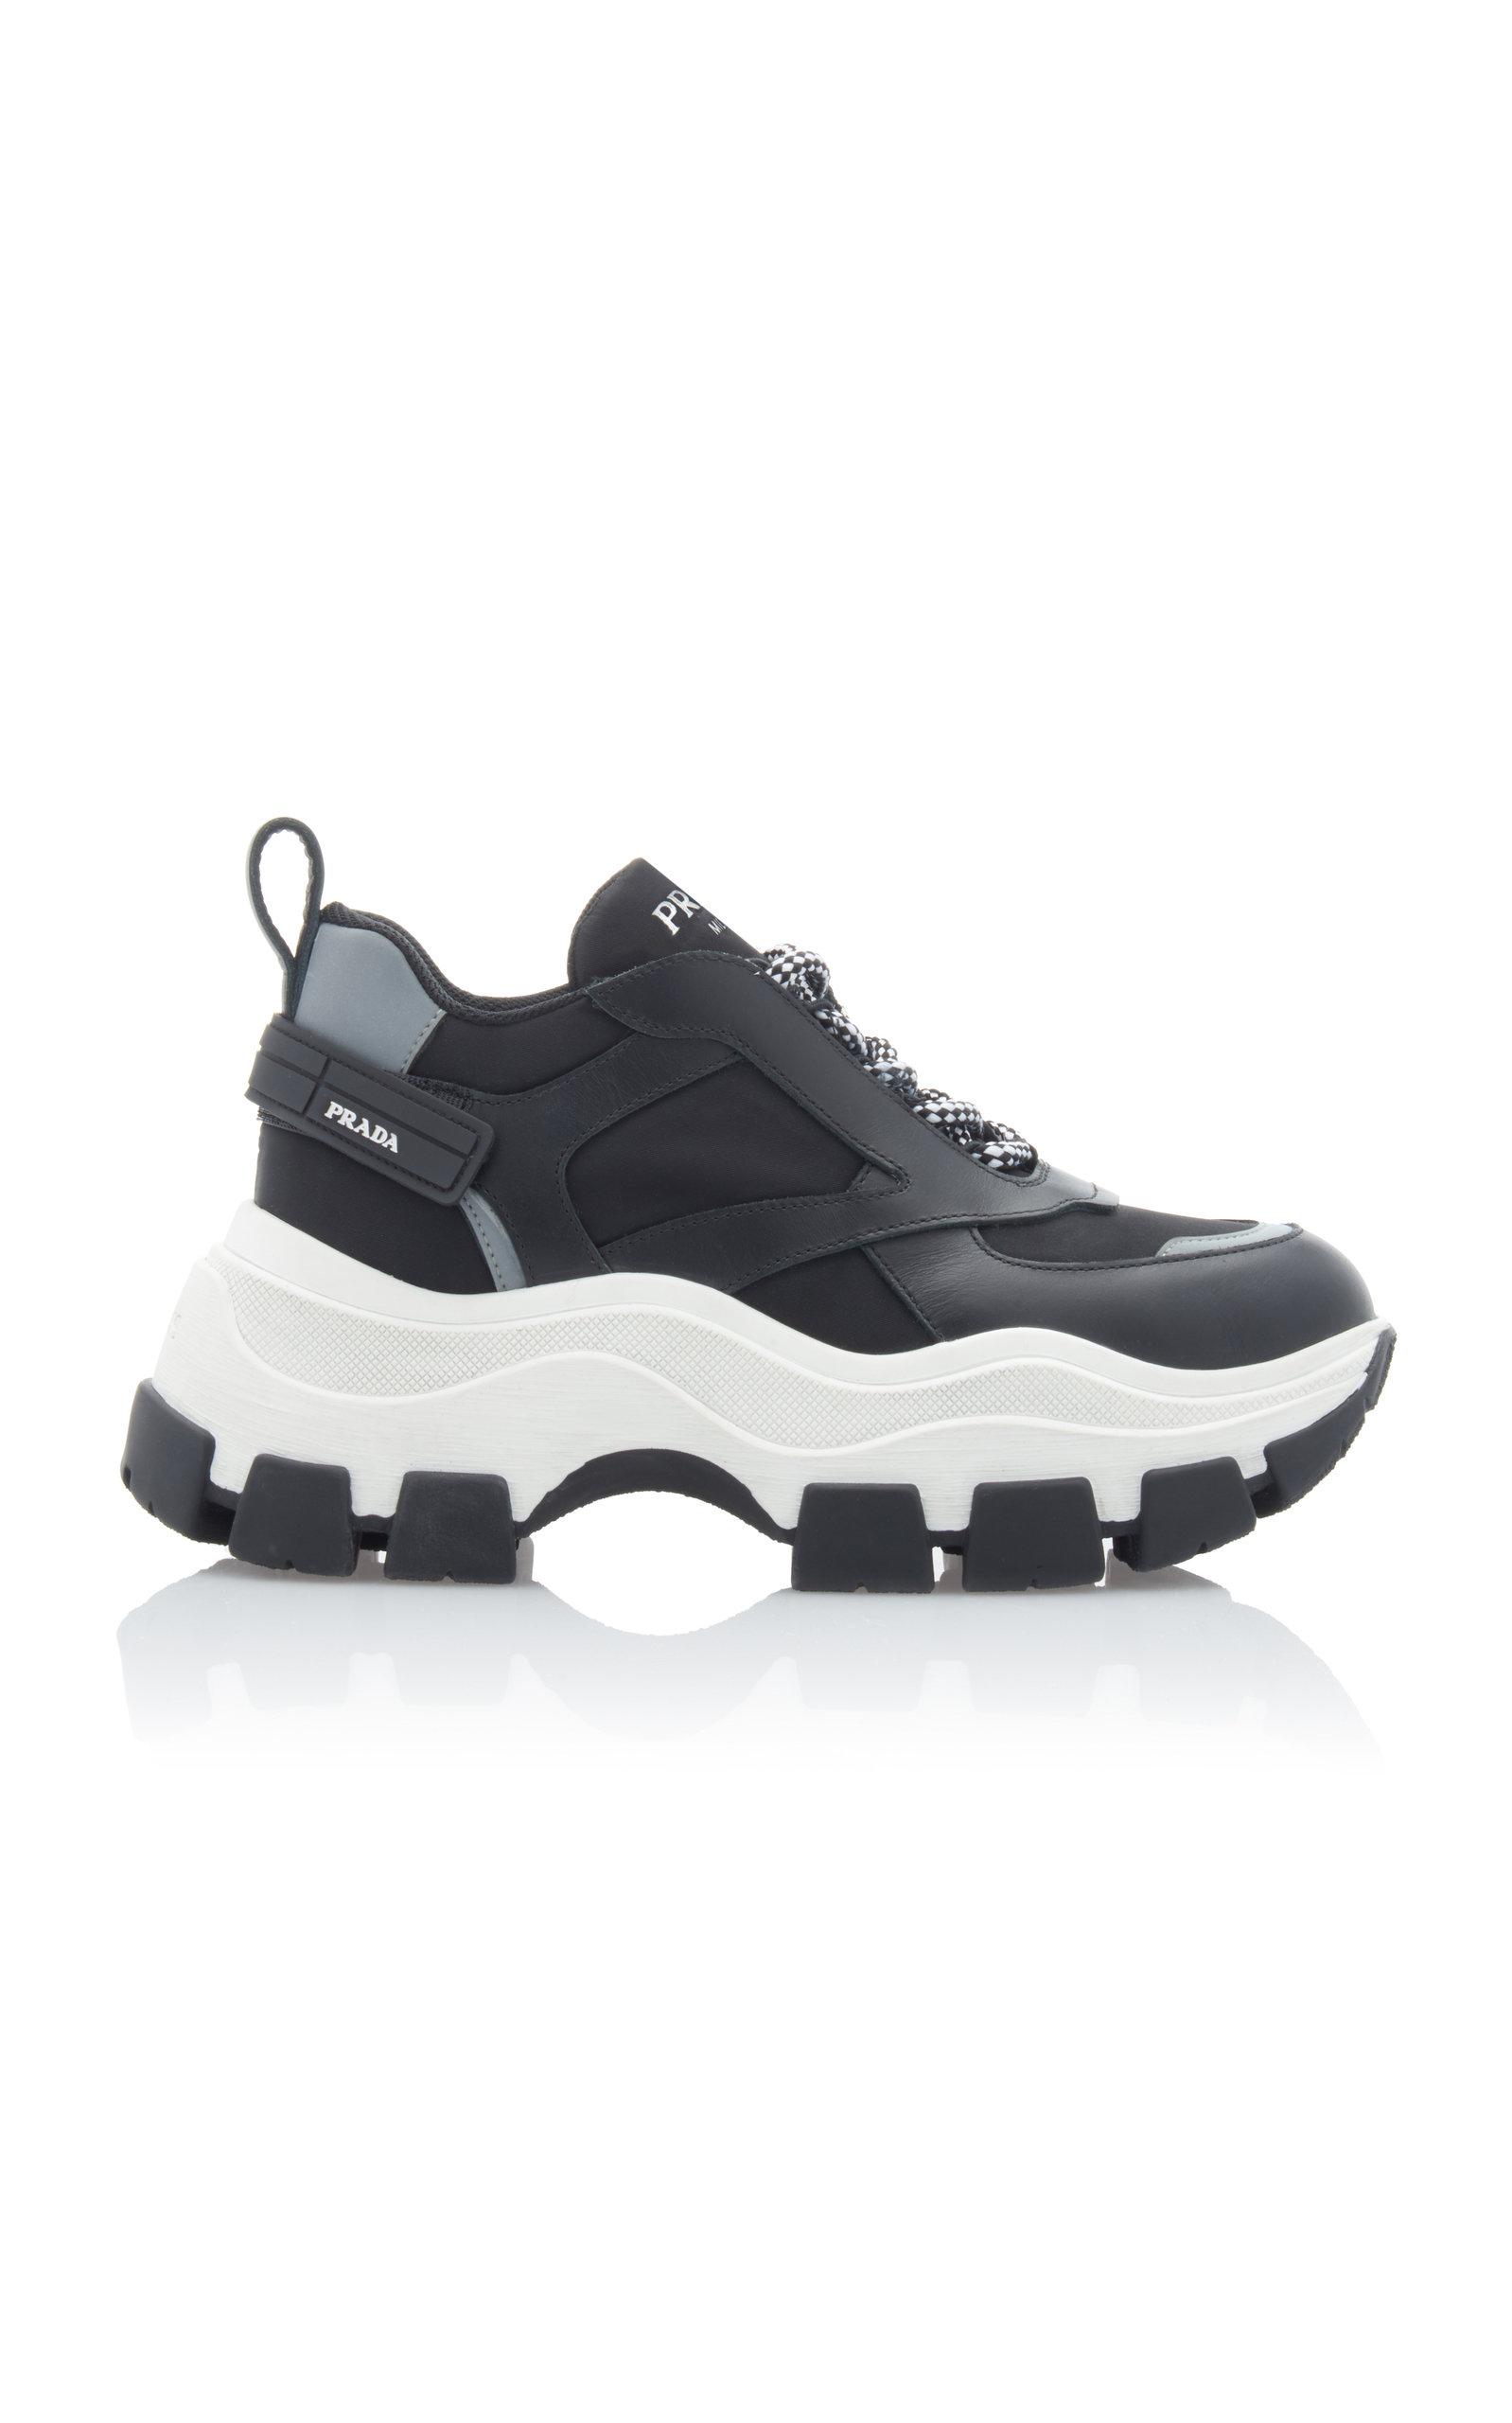 Prada Black Leather Low Top Chunky Sneakers - Lyst